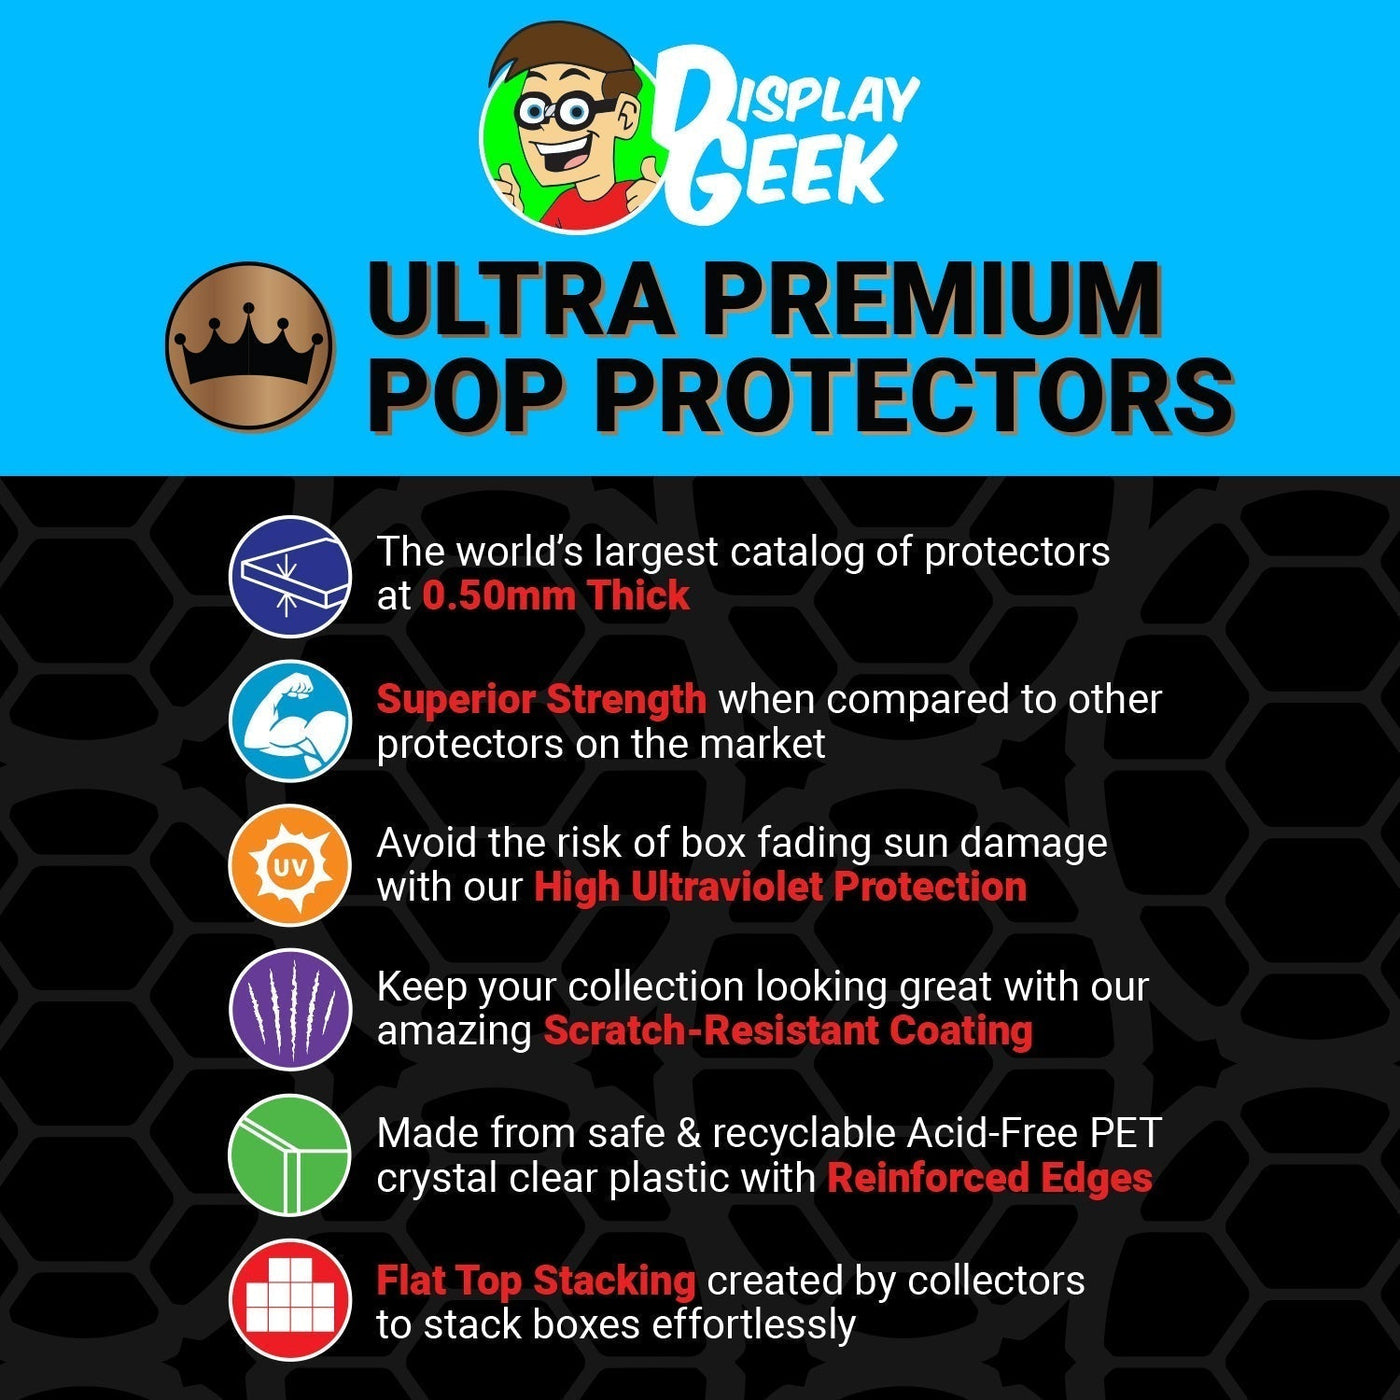 Pop Protector for 6 inch Treasure Skeleton Glow ECCC #783 Super Funko Pop on The Protector Guide App by Display Geek